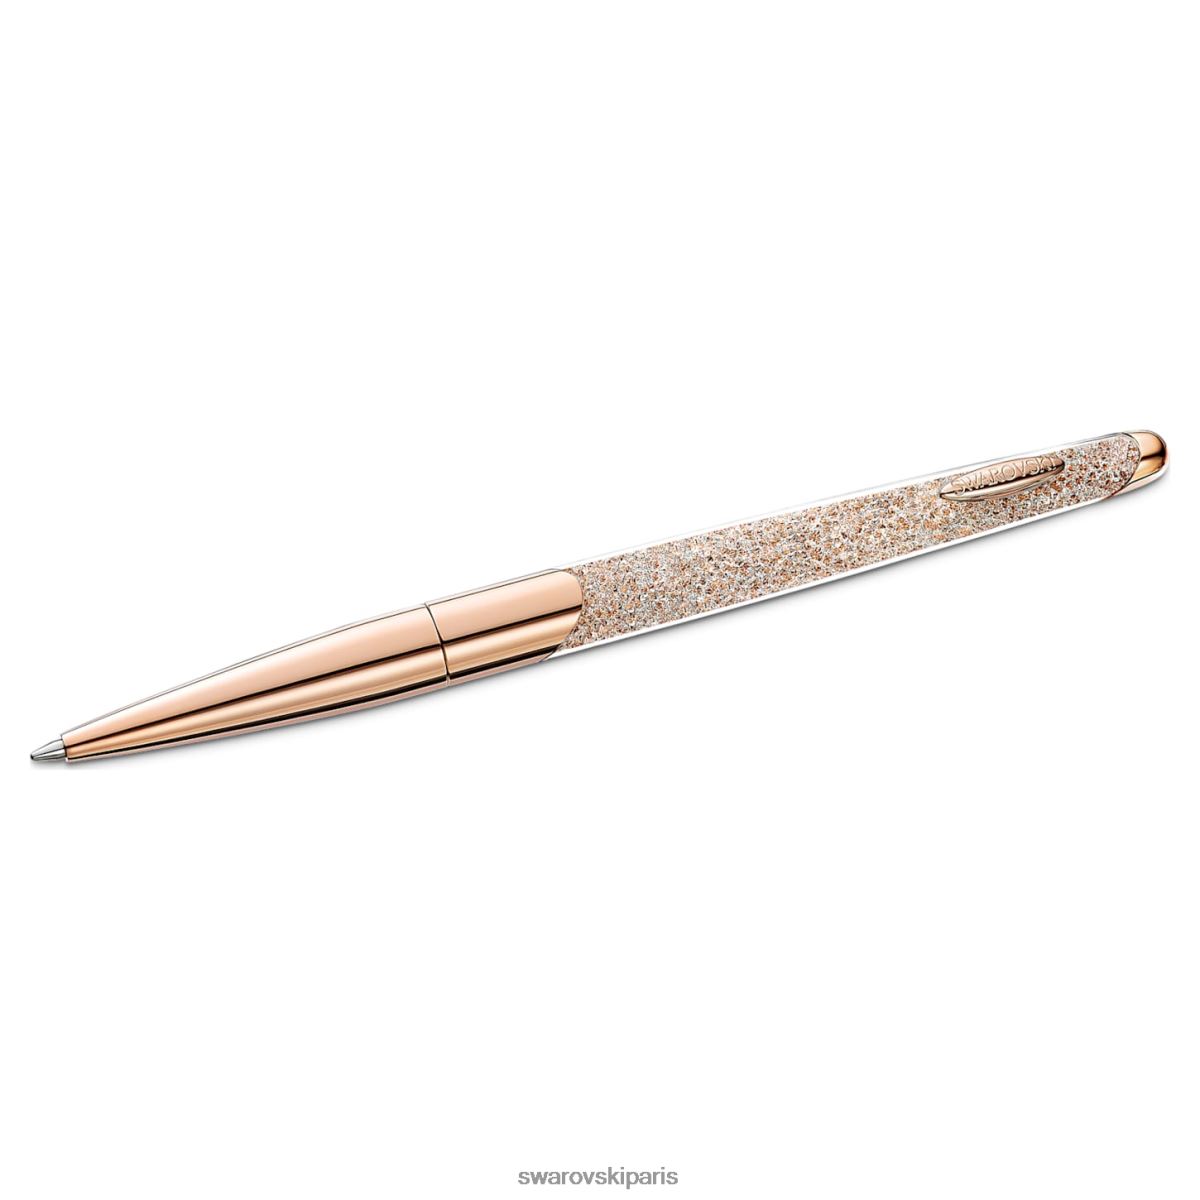 accessoires Swarovski stylo à bille cristallin nova ton or rose, plaqué ton or rose RZD0XJ1291